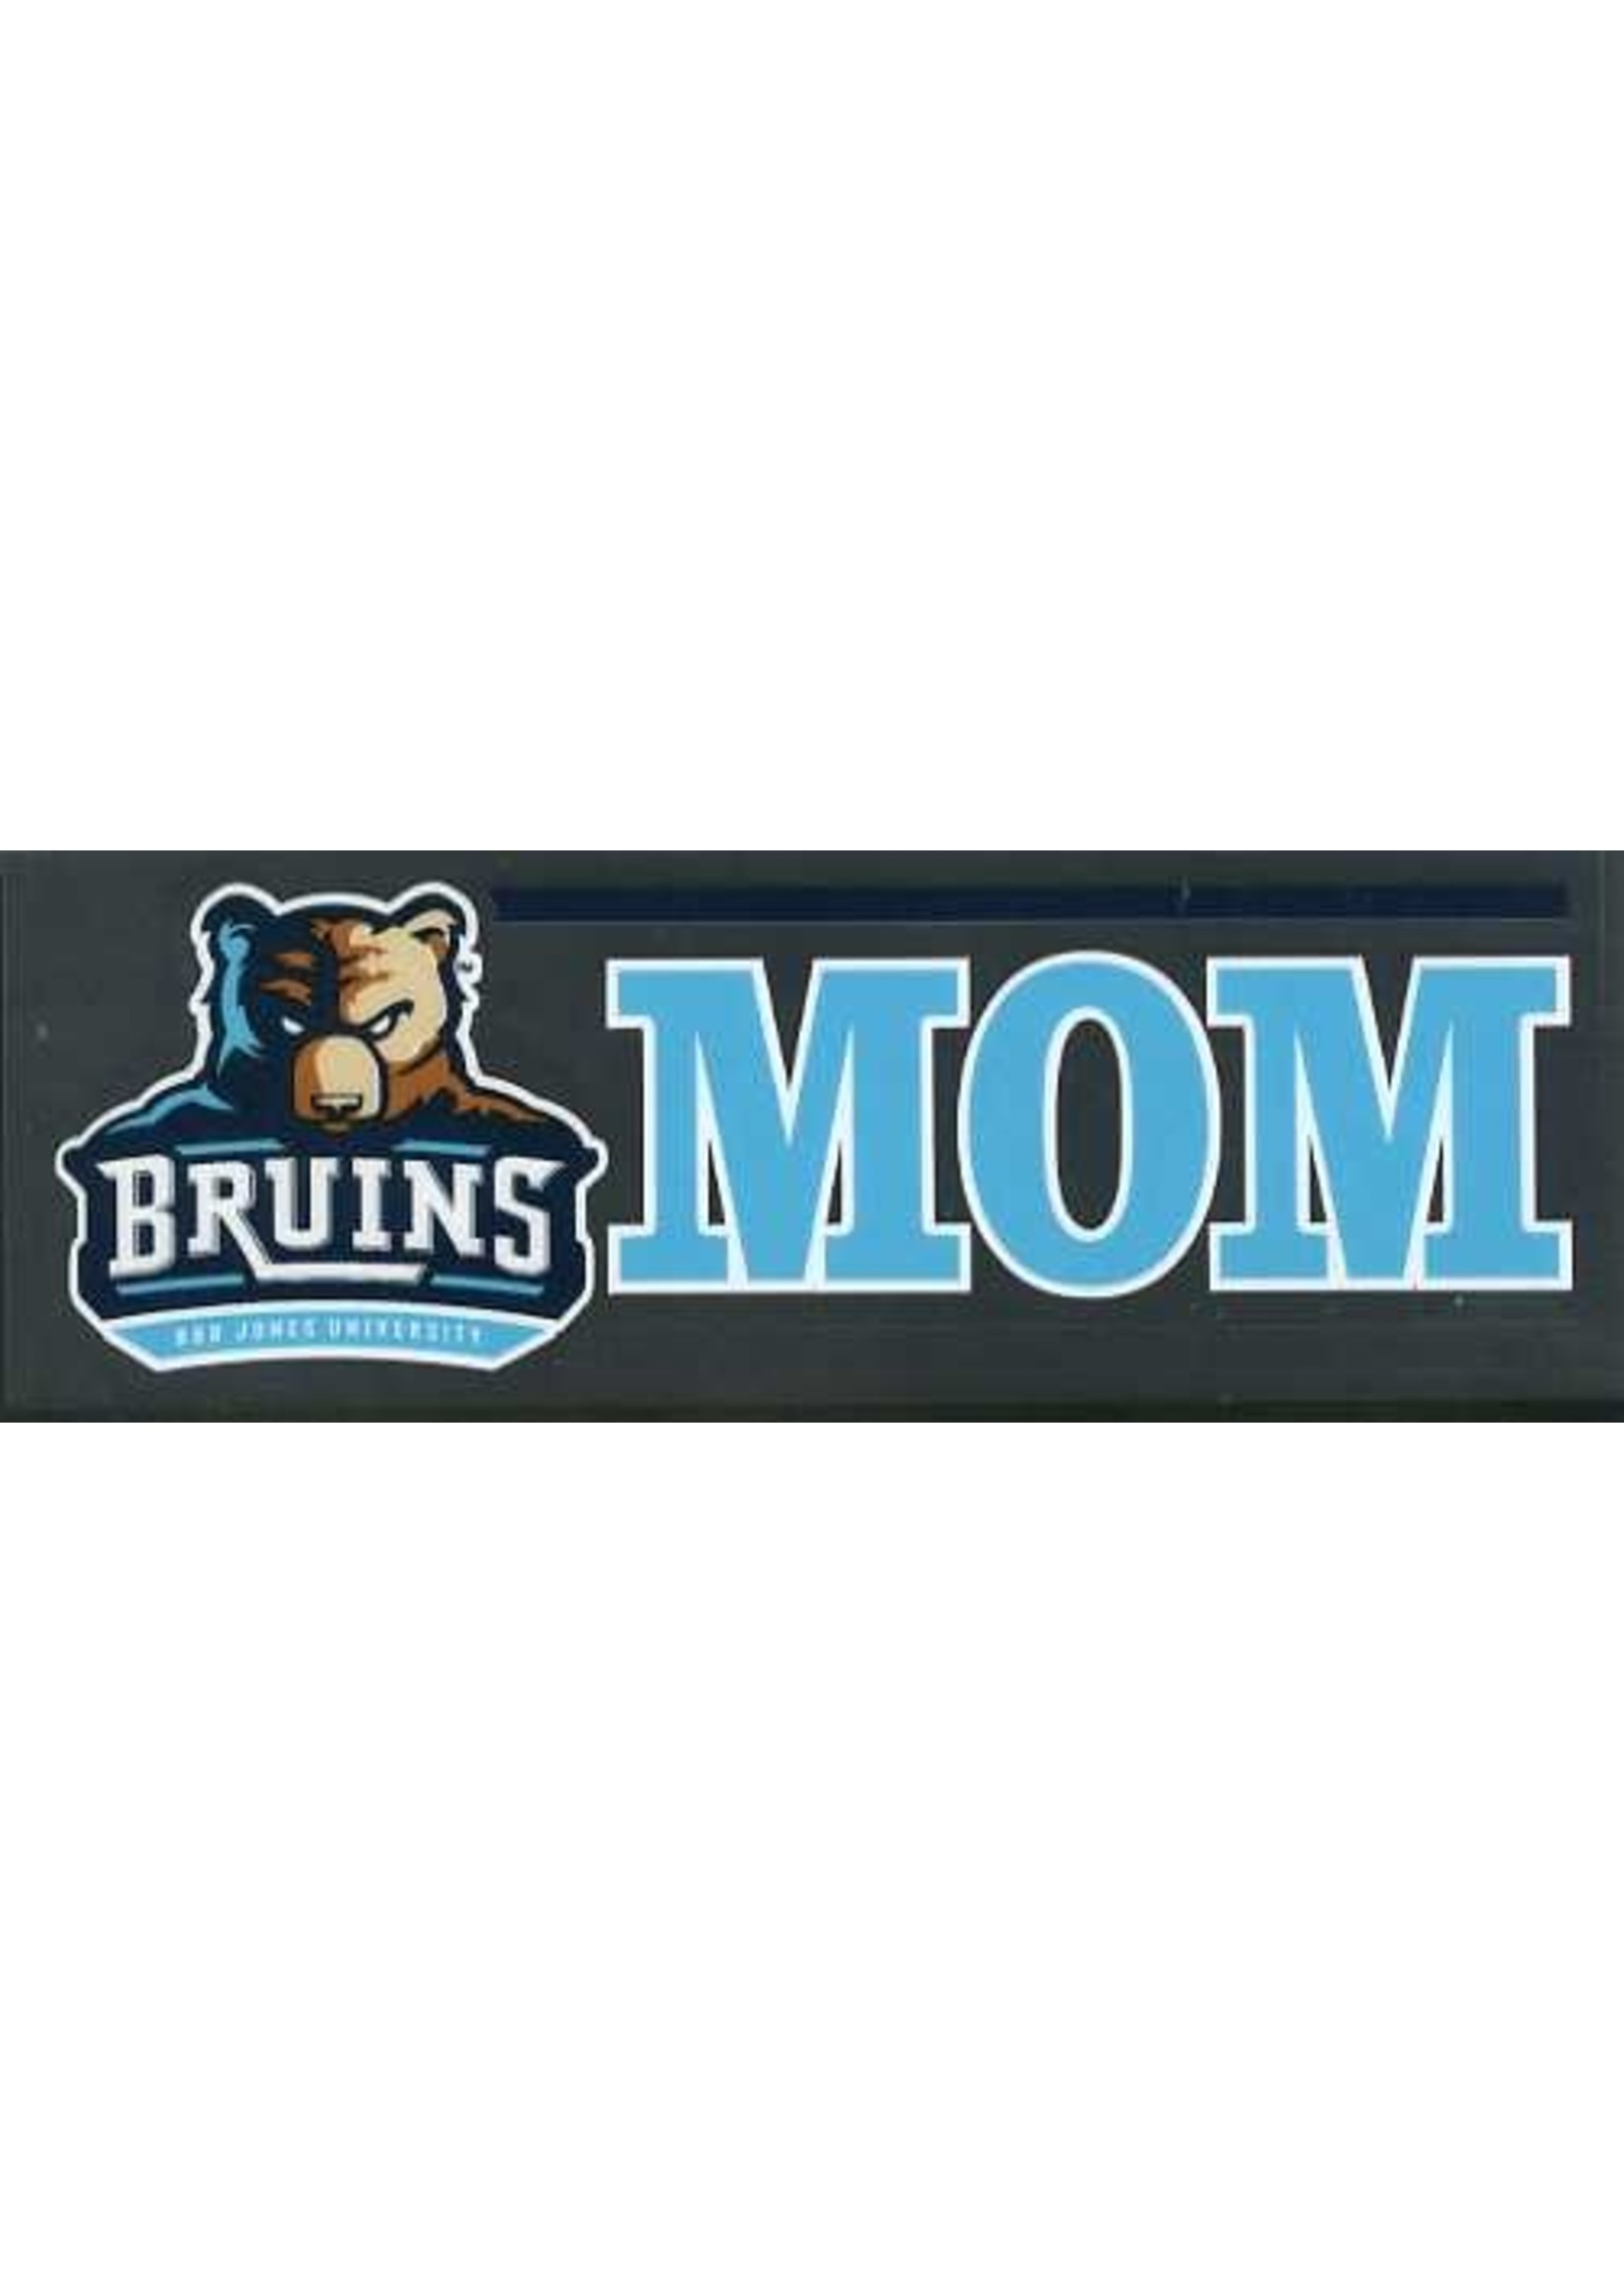 Bruins Mom Decal